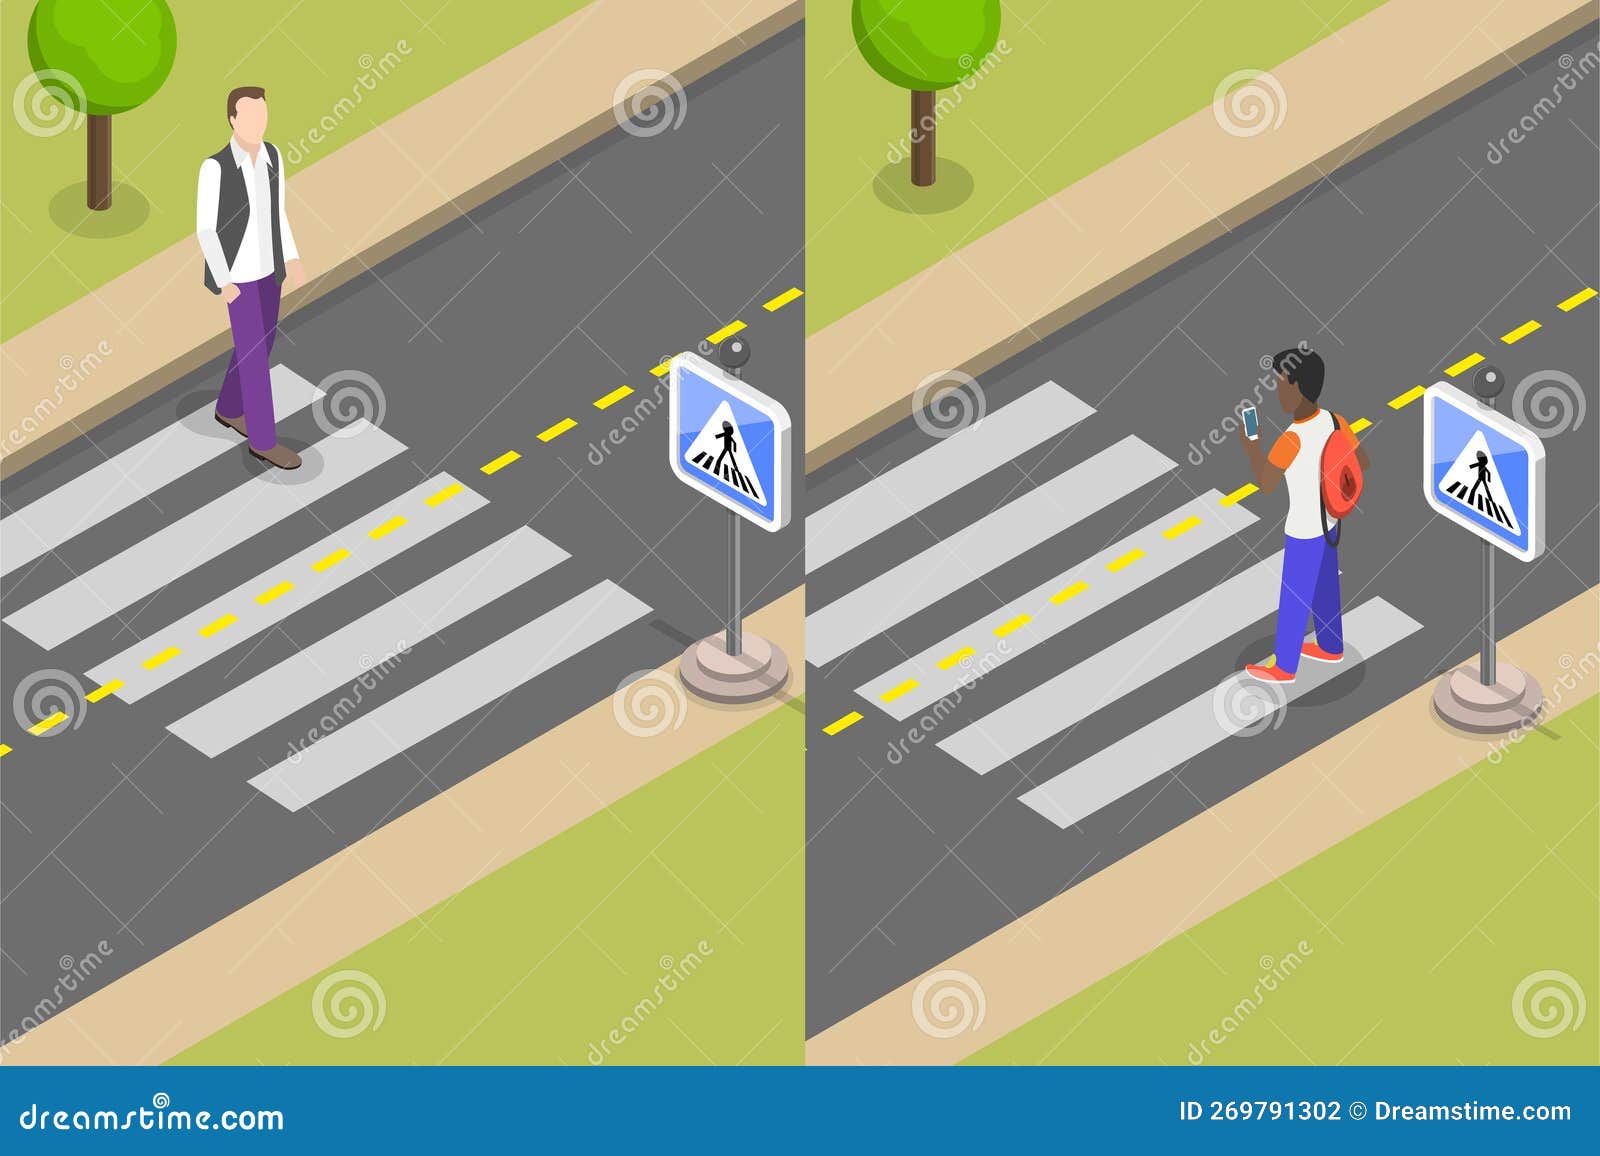 3D Isometric Flat Vector Conceptual Illustration Of Pedestrian